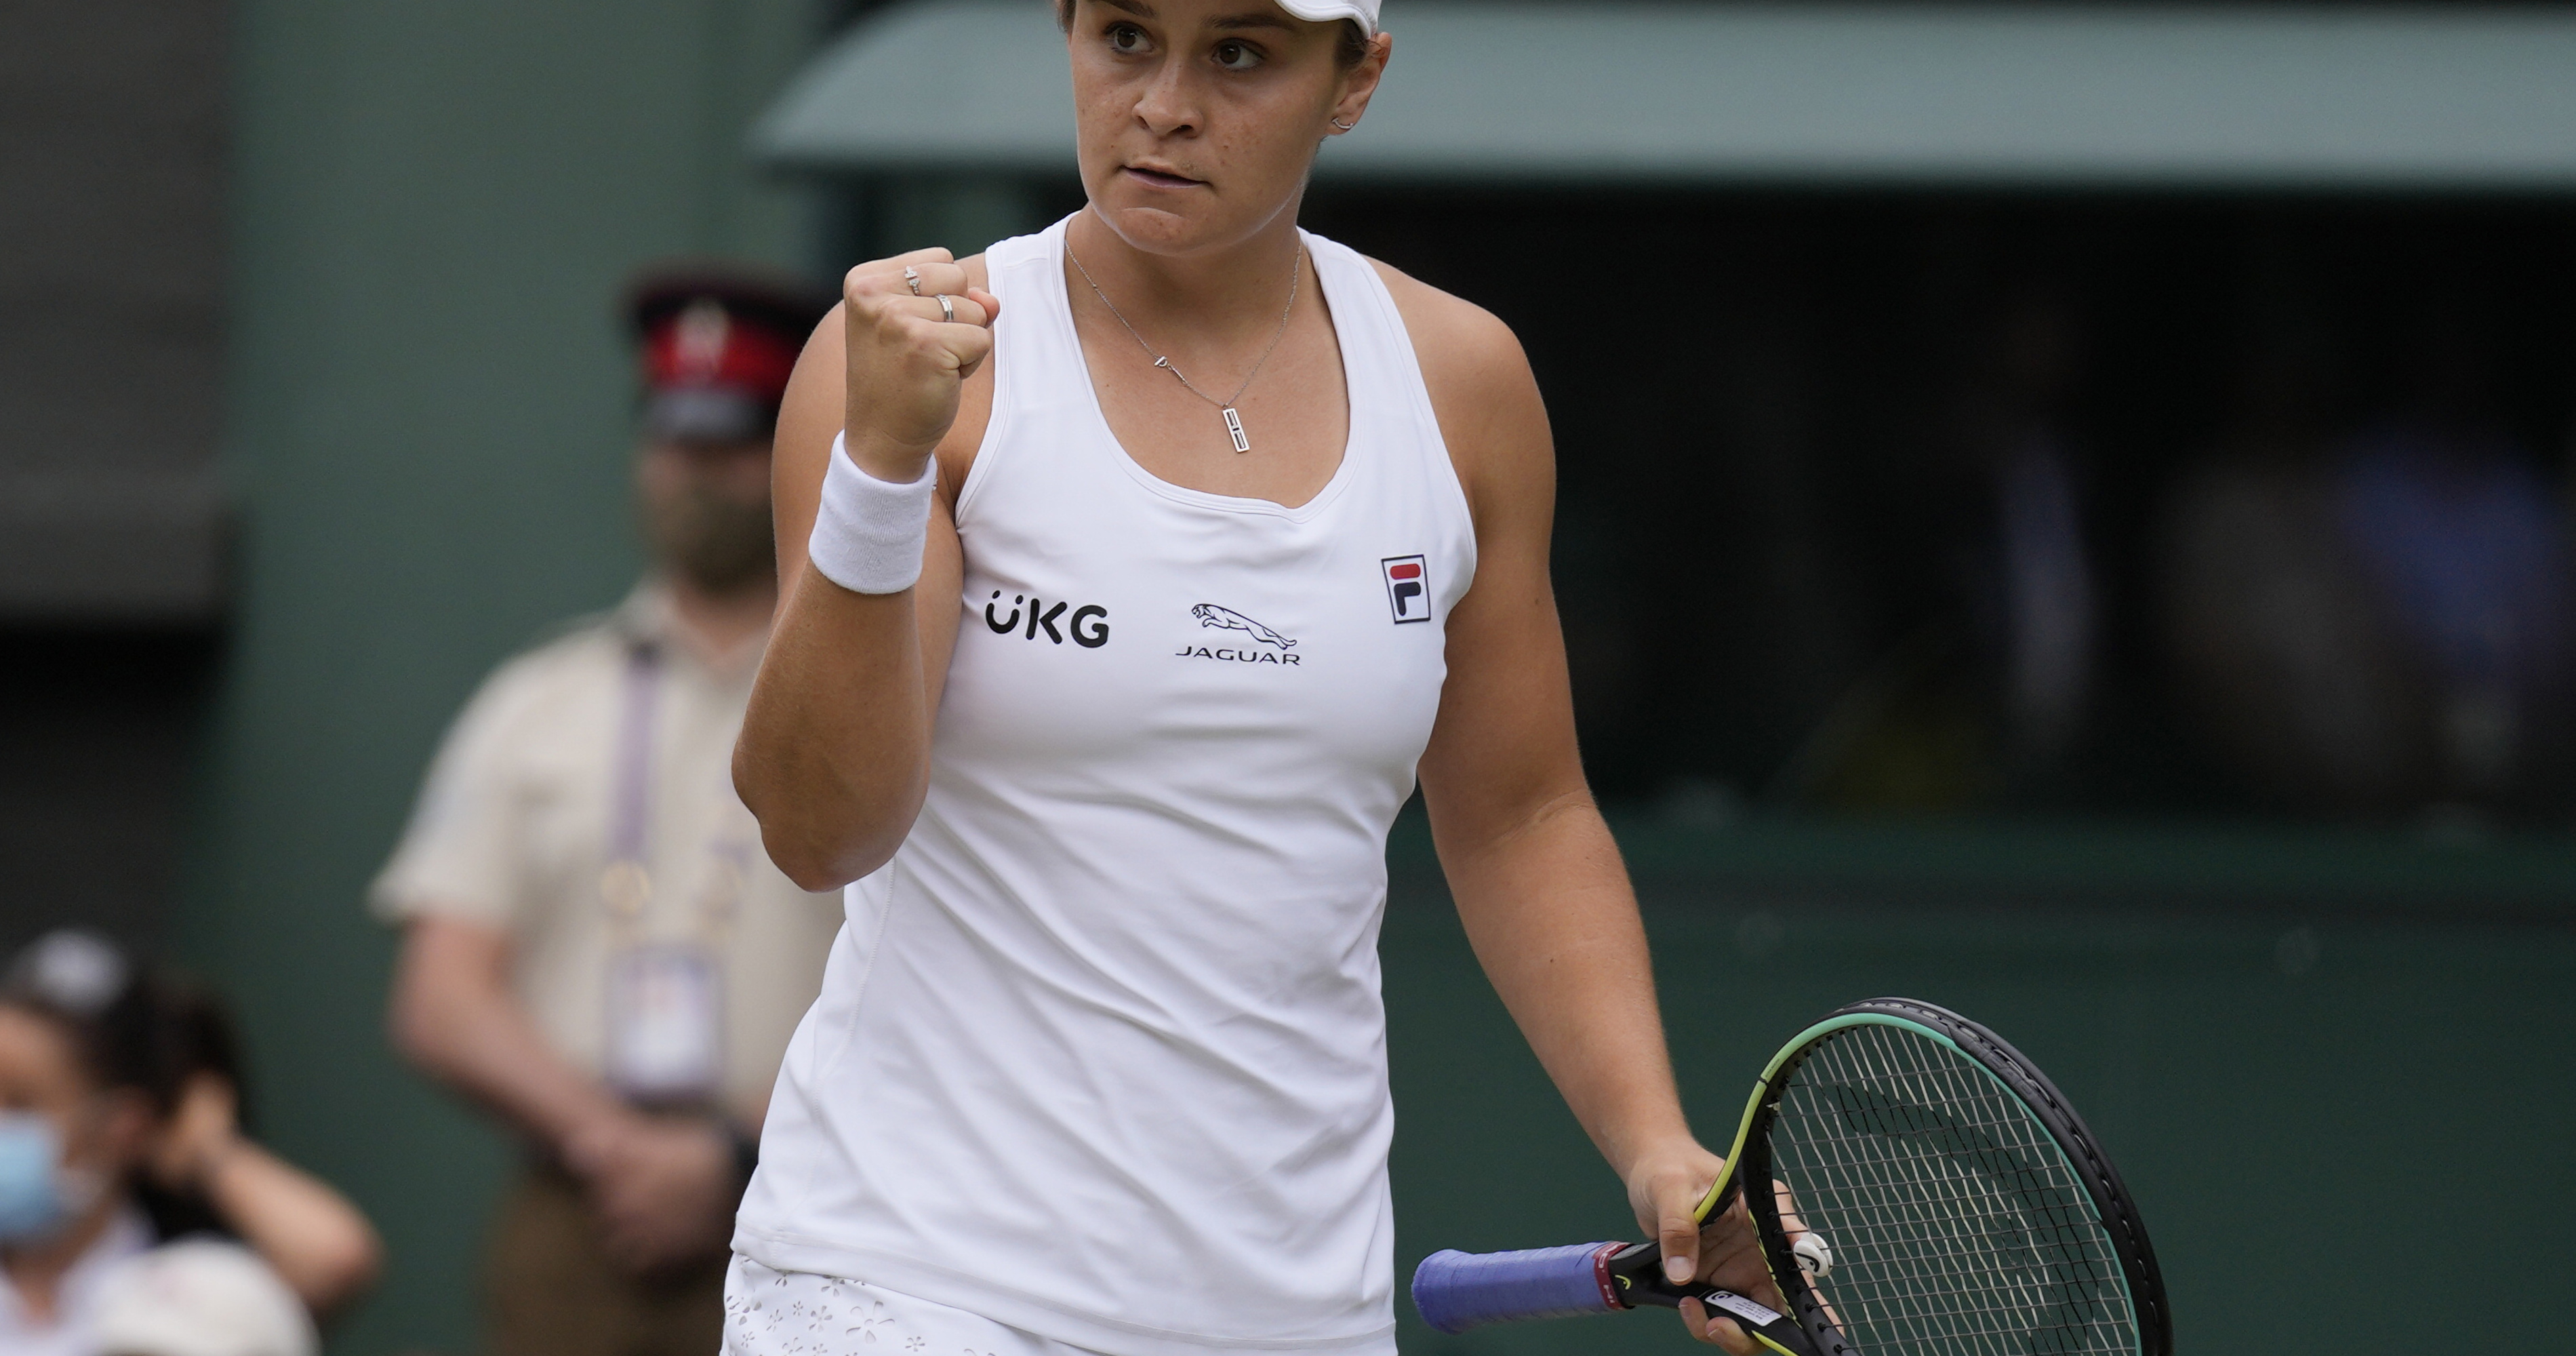 Wimbledon 2021: Ashleigh Barty defeats Karolina Pliskova for 2nd Grand Slam  title - The Economic Times Video